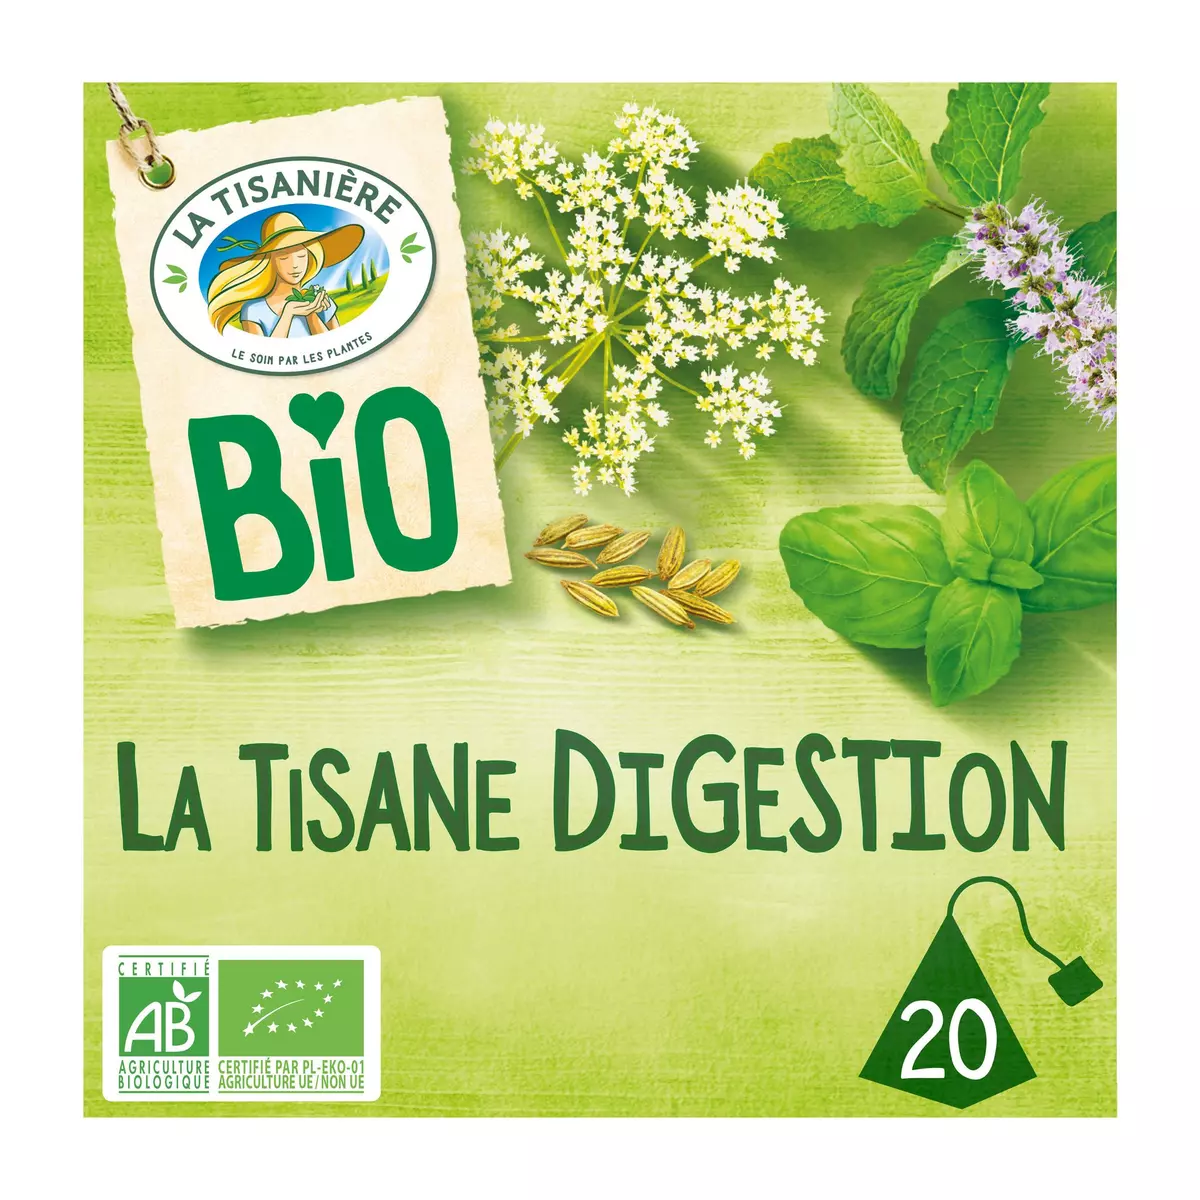 Infusion digestion - Jardin Bio - 30 g (20 sachets de 1,5 g)